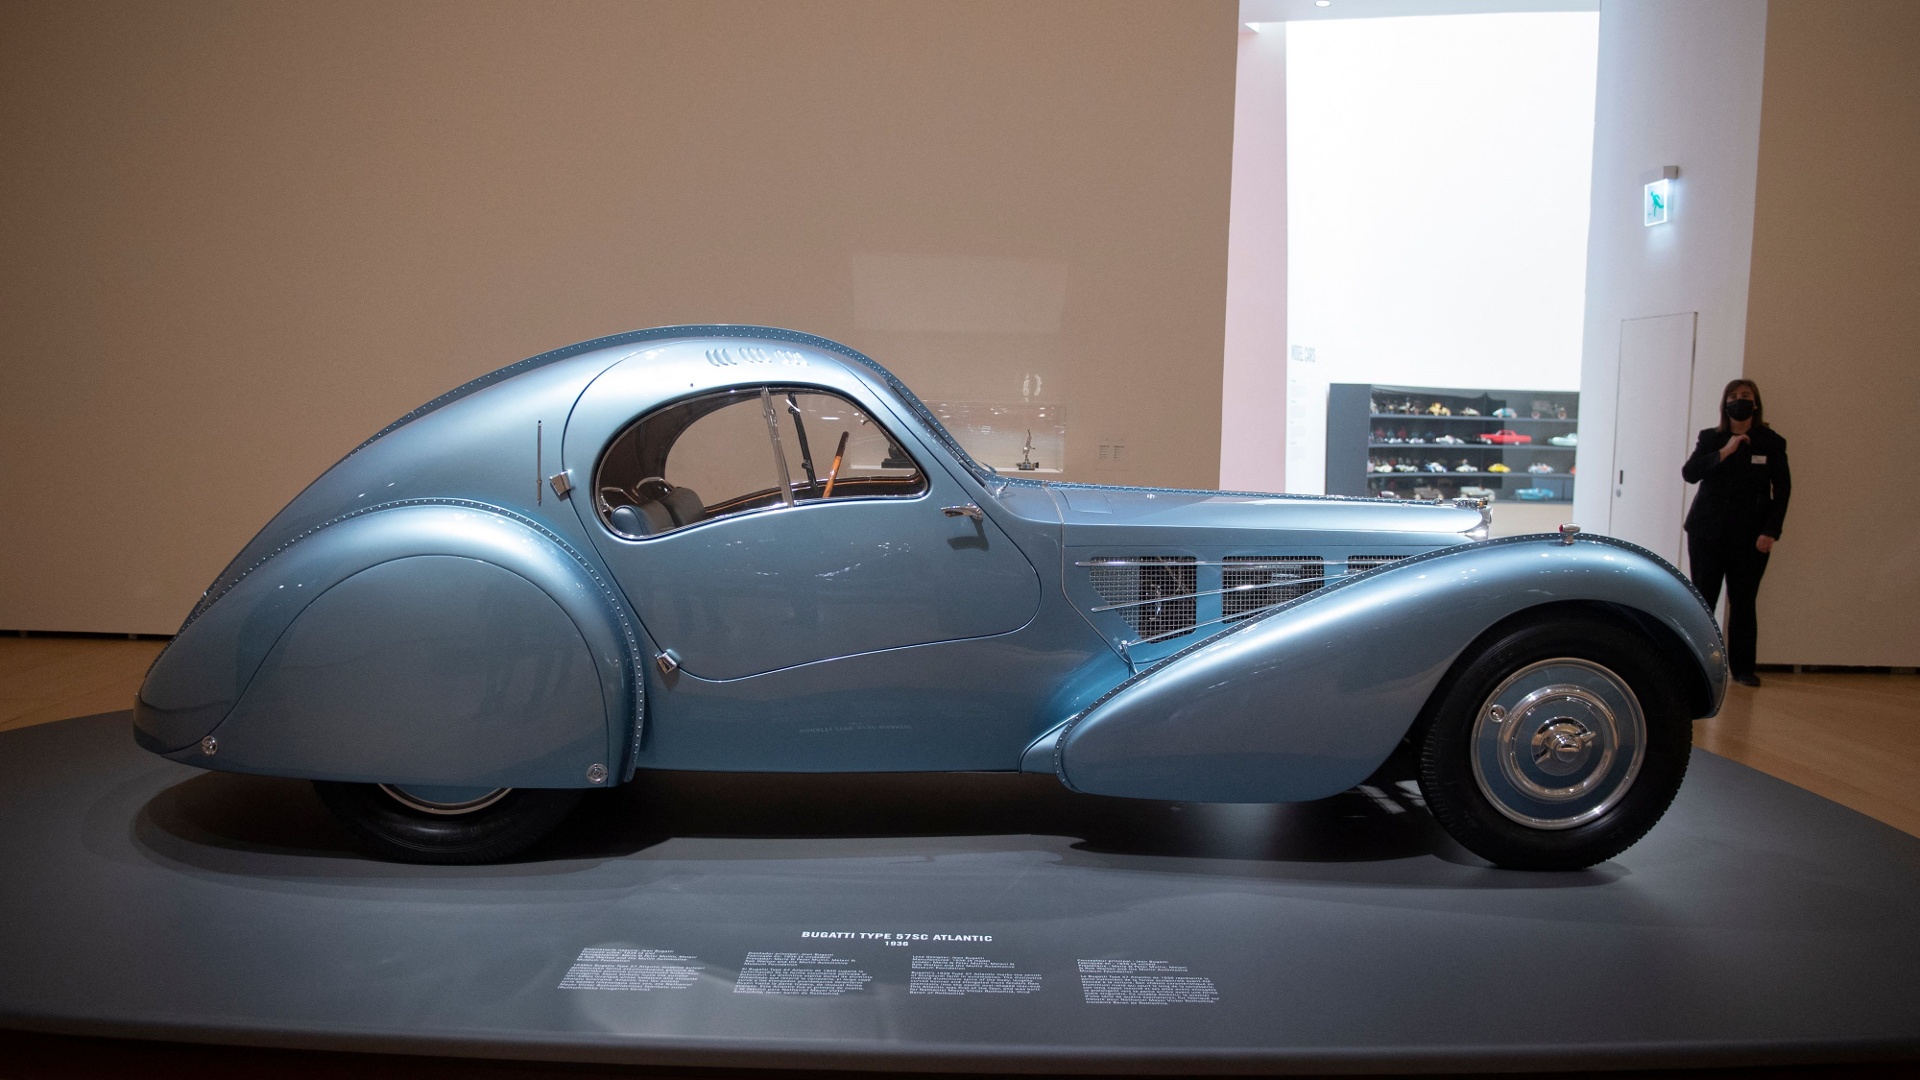 Как искусство и архитектура влияли на развитие автомобилей, показали на выставке в Испании